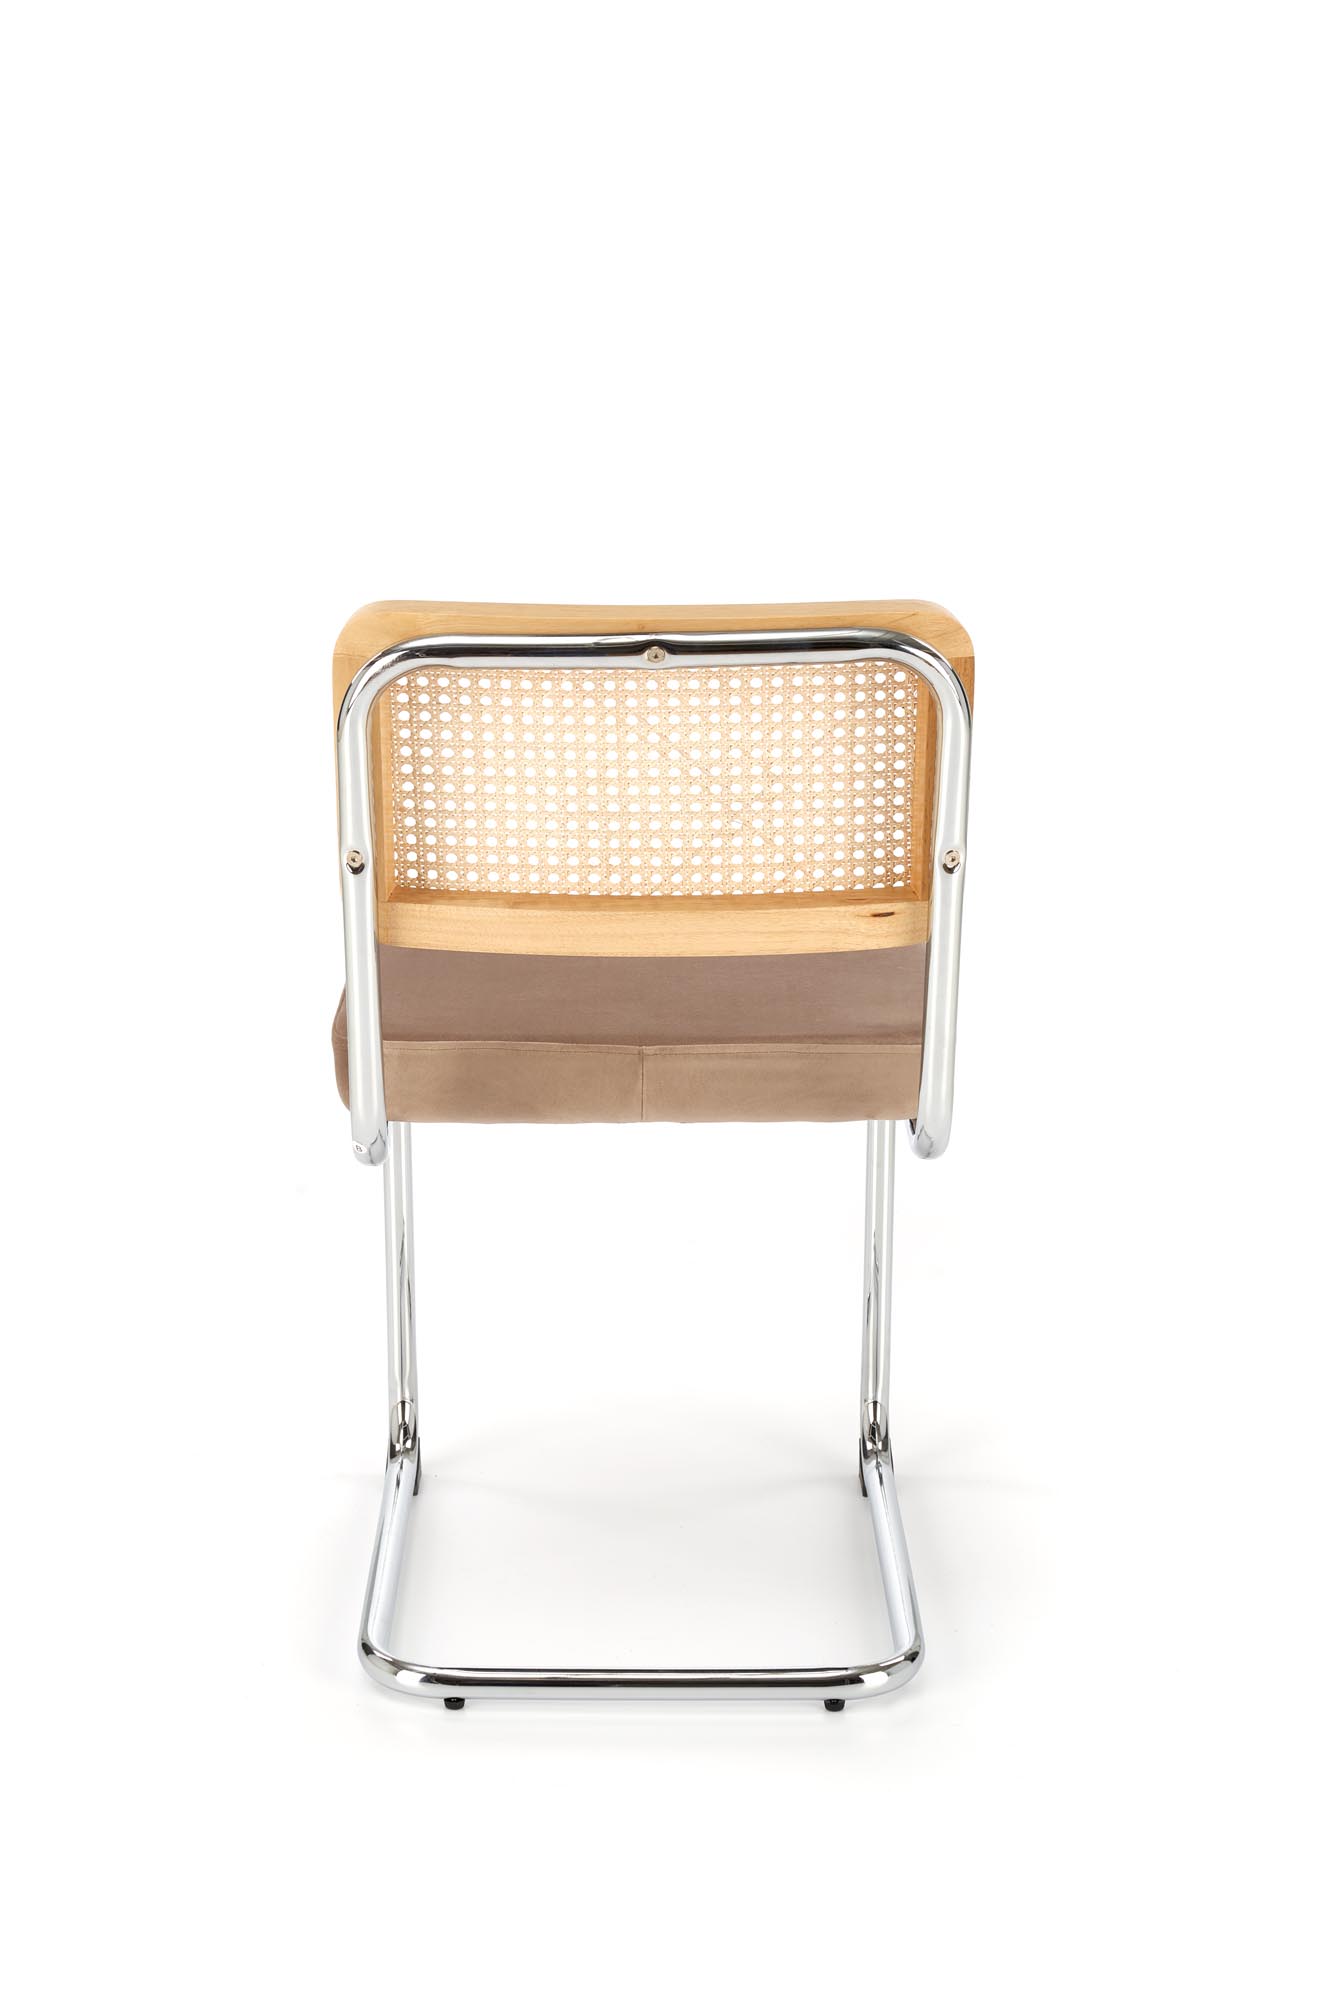 Scaun K504 bej / natur scaune metalowe cu scaun tapițat k504 - bej / natural